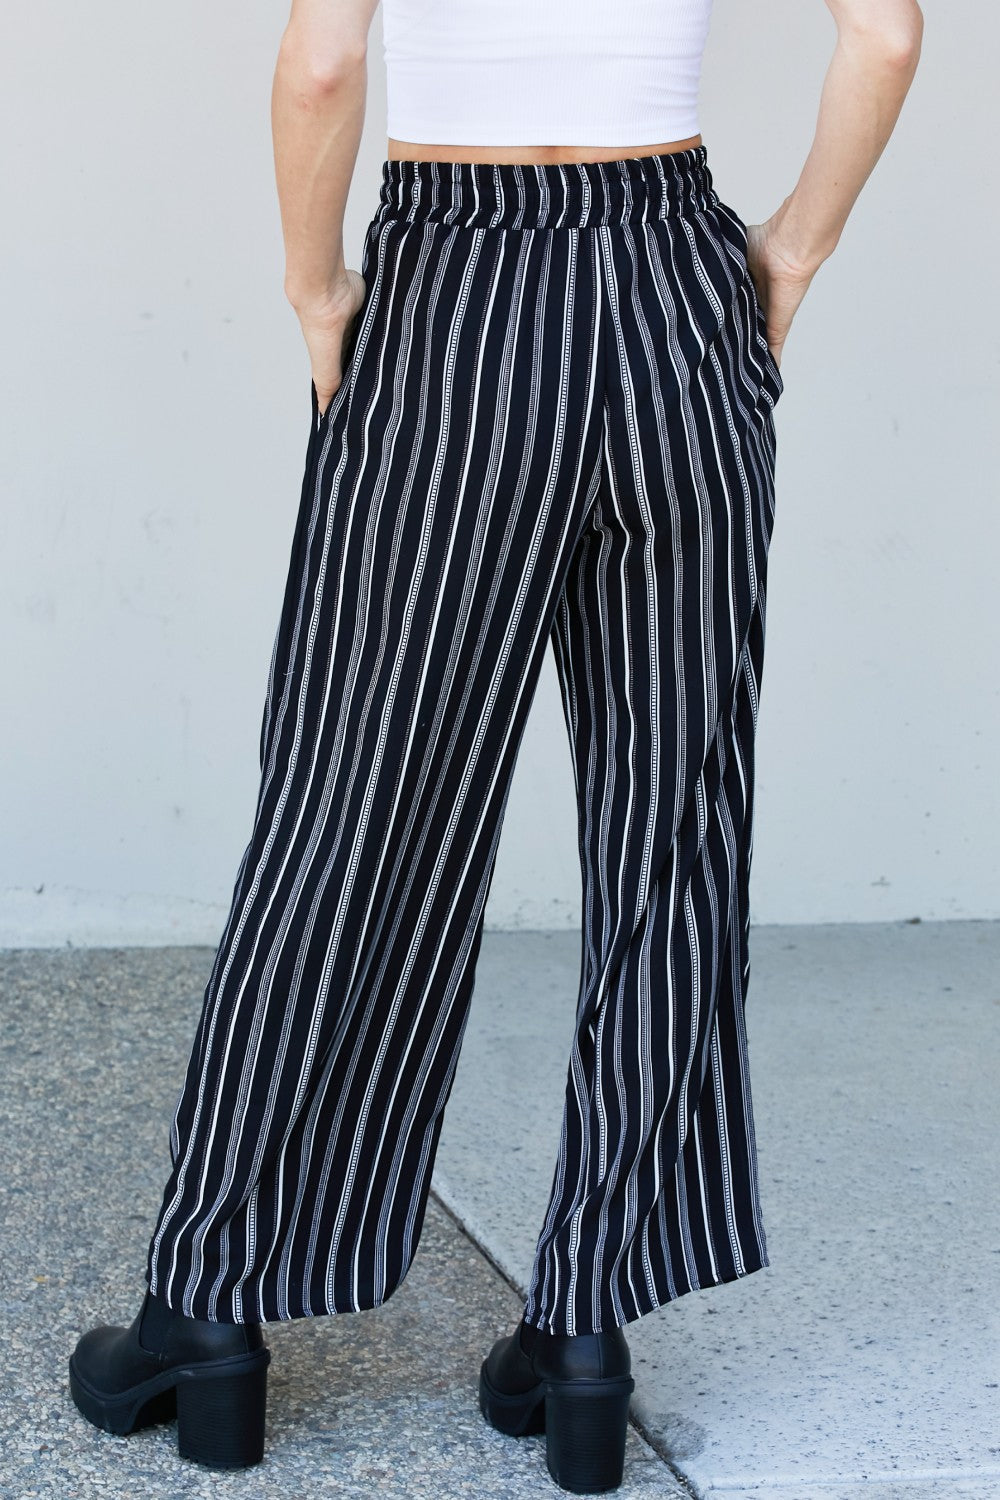 CY Fashion Full Size Striped Drawstring Waist Wide Leg Pants with Pockets